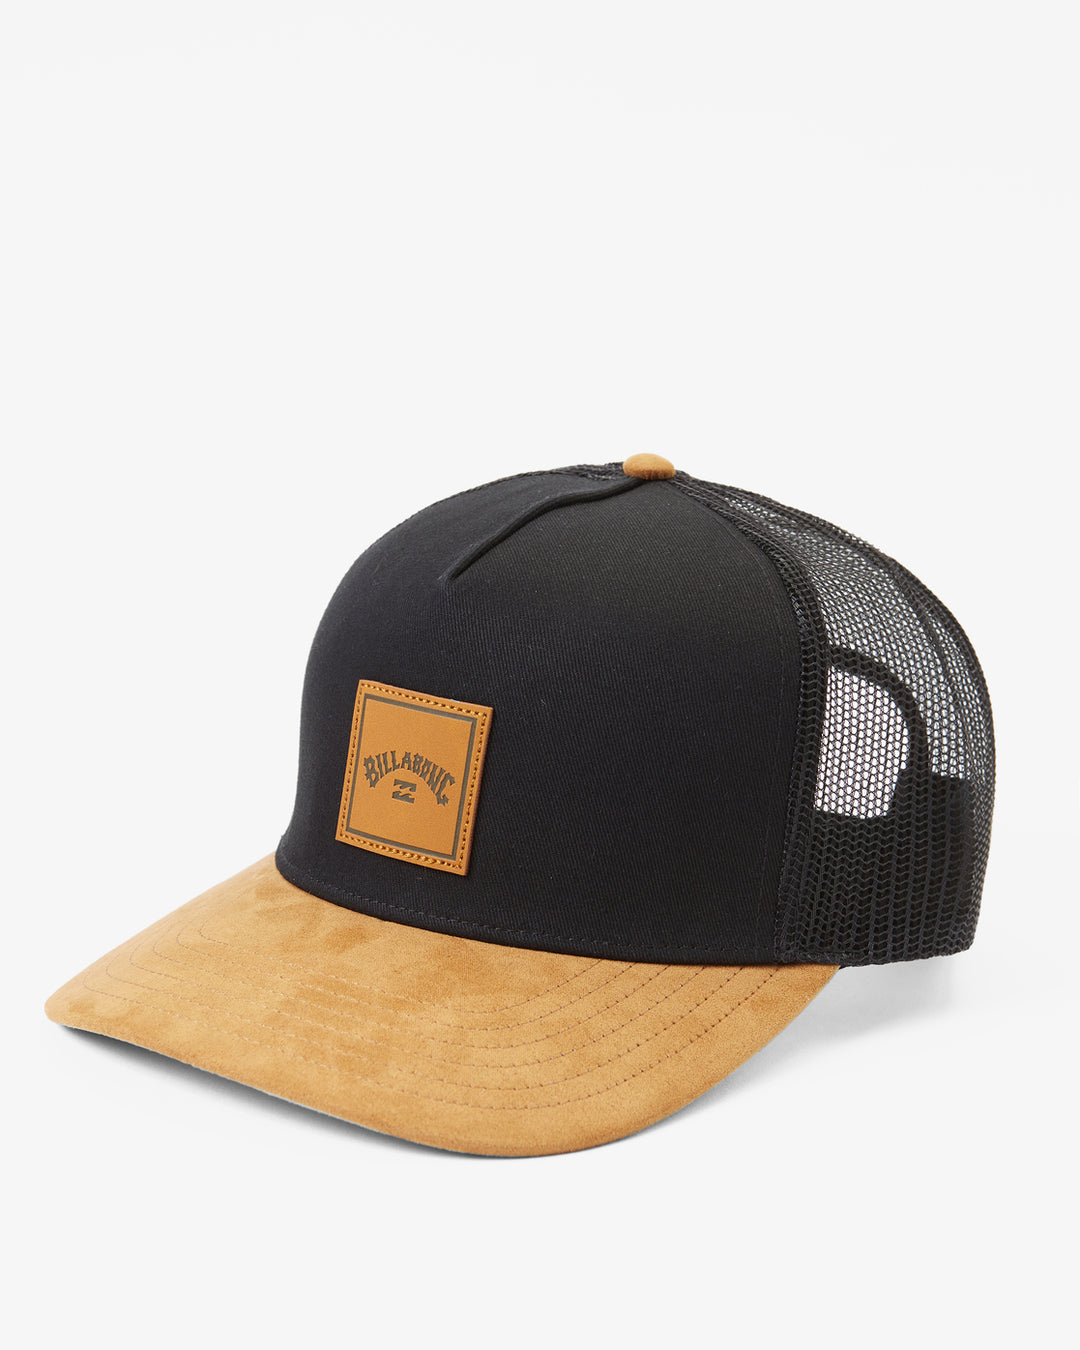 Billabong Hat Black/Tan Sun - Diego – Boardshop Trucker Stacked